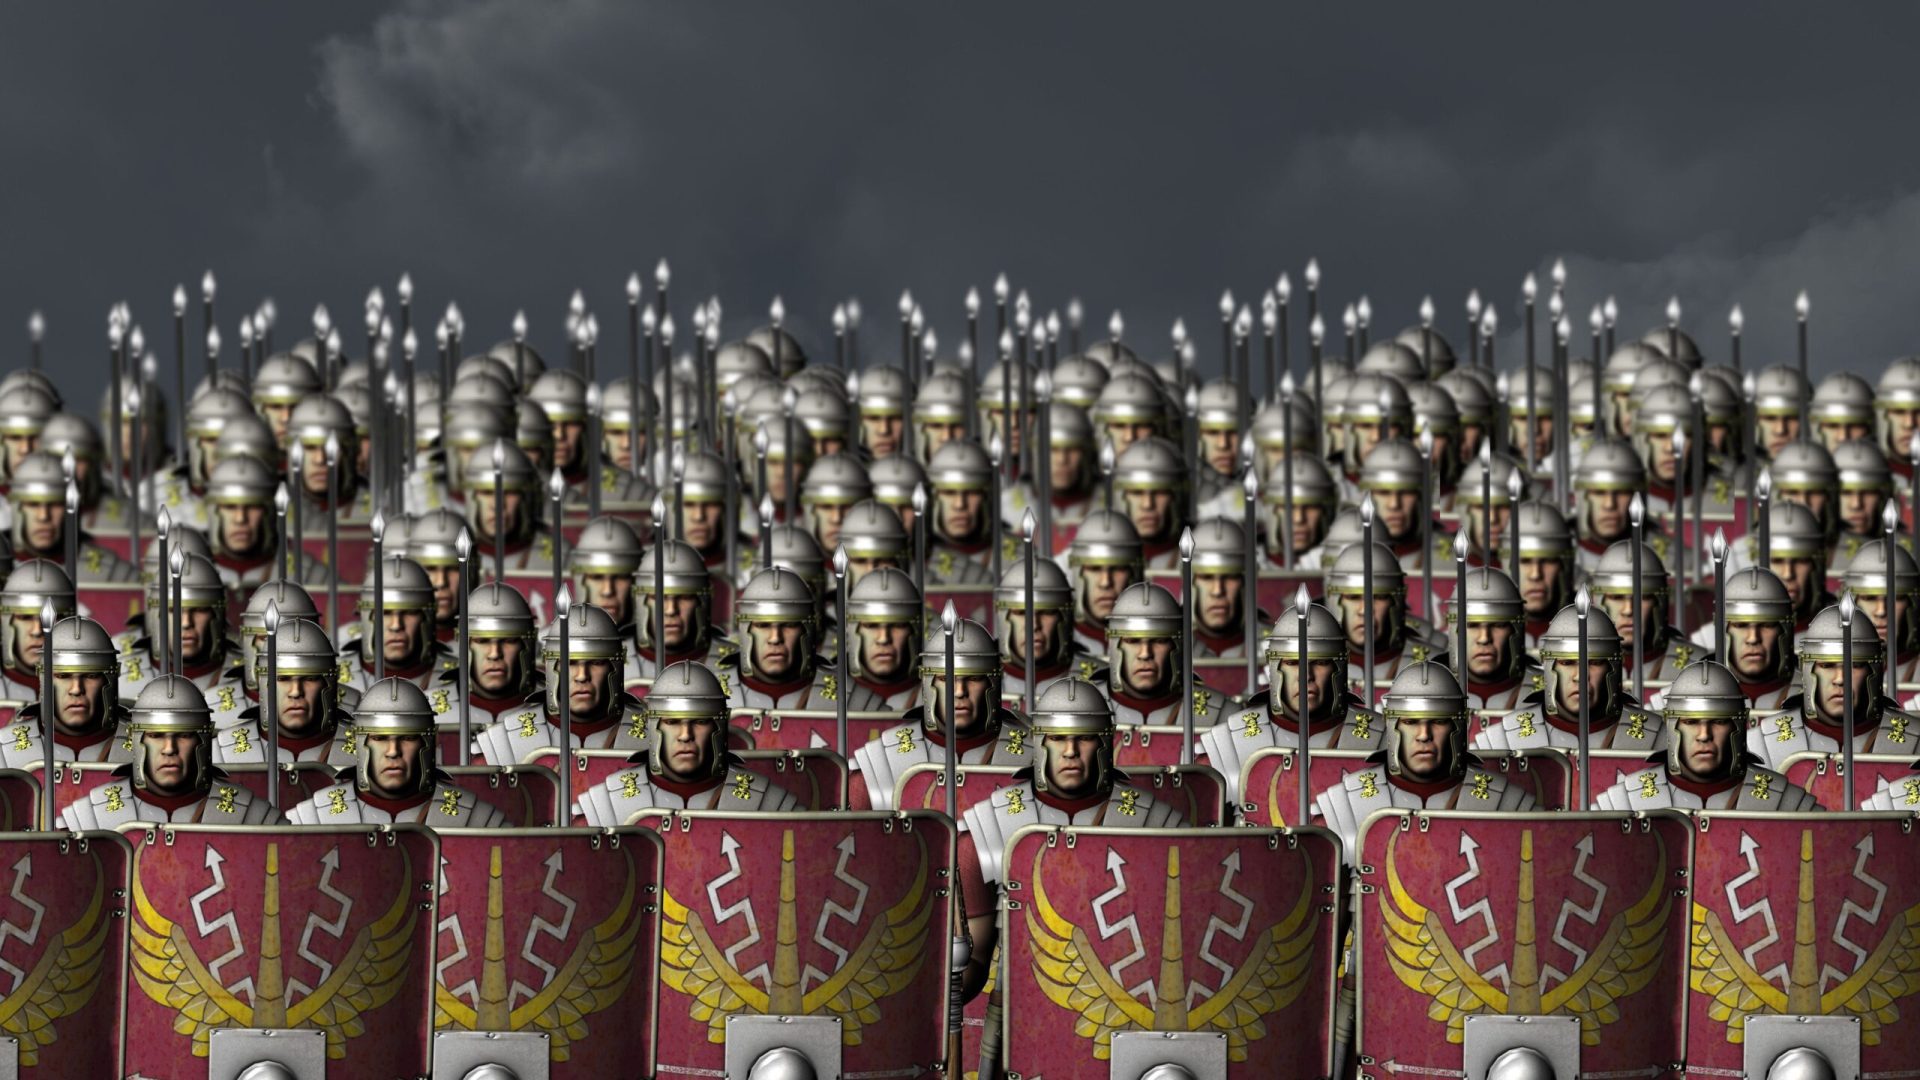 Armata romana, spermograma,